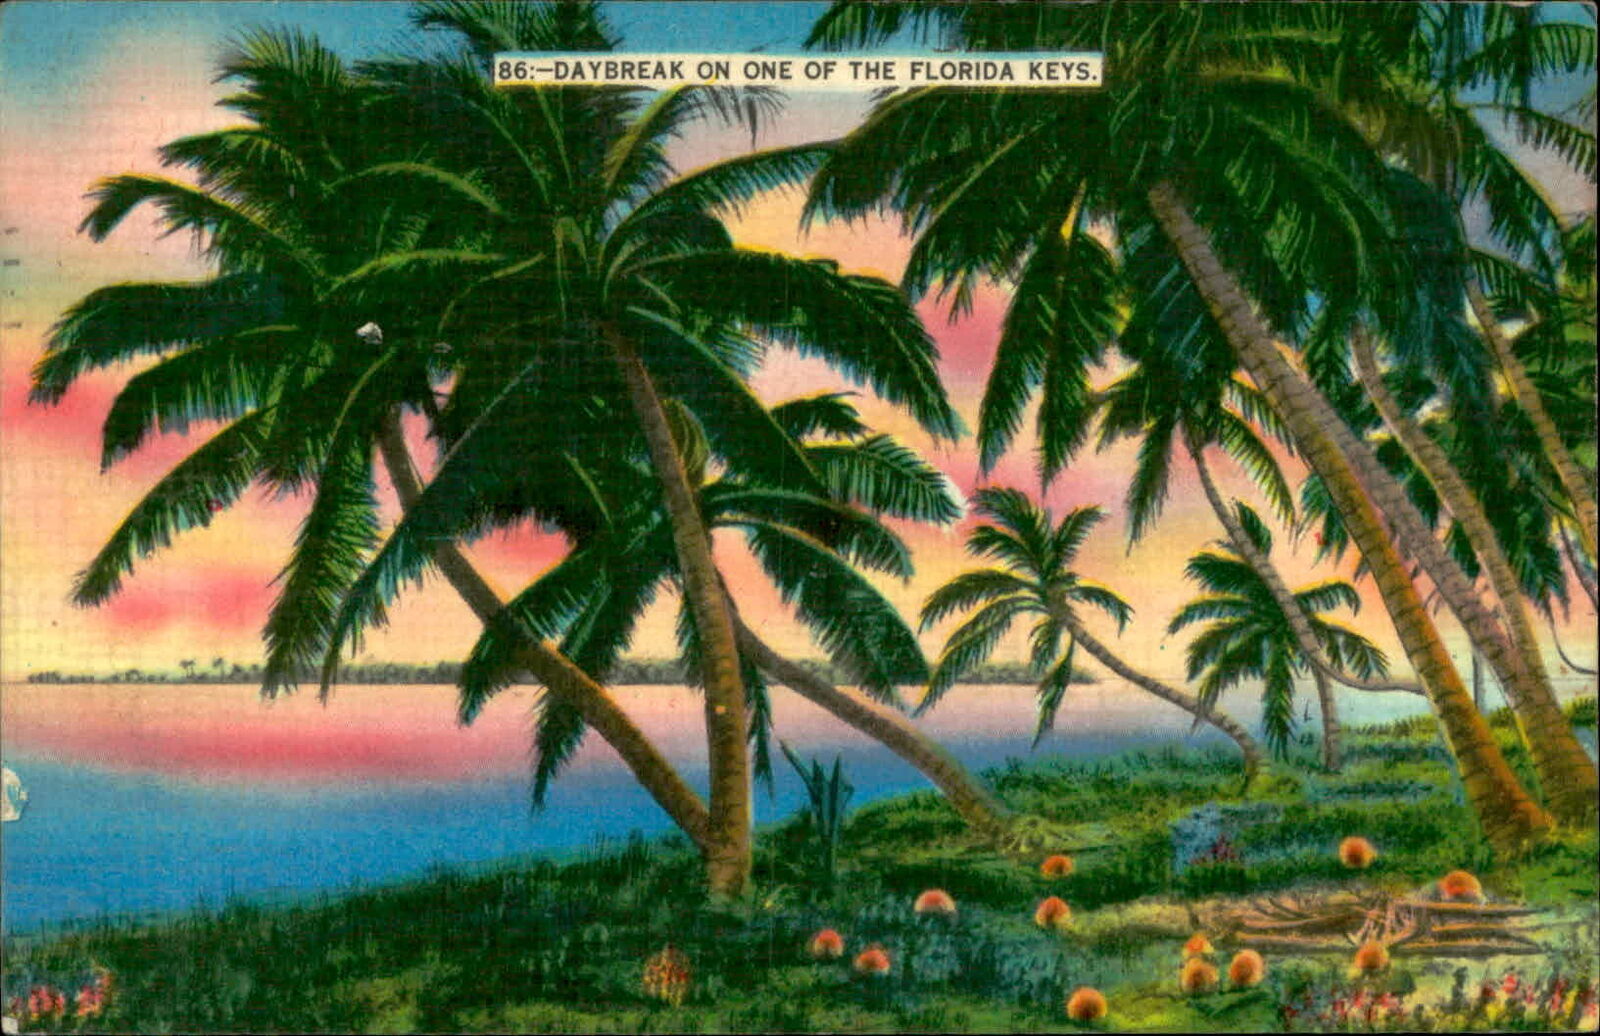 Postcard: 86:-DAYBREAK ON ONE OF THE FLORIDA KEYS.